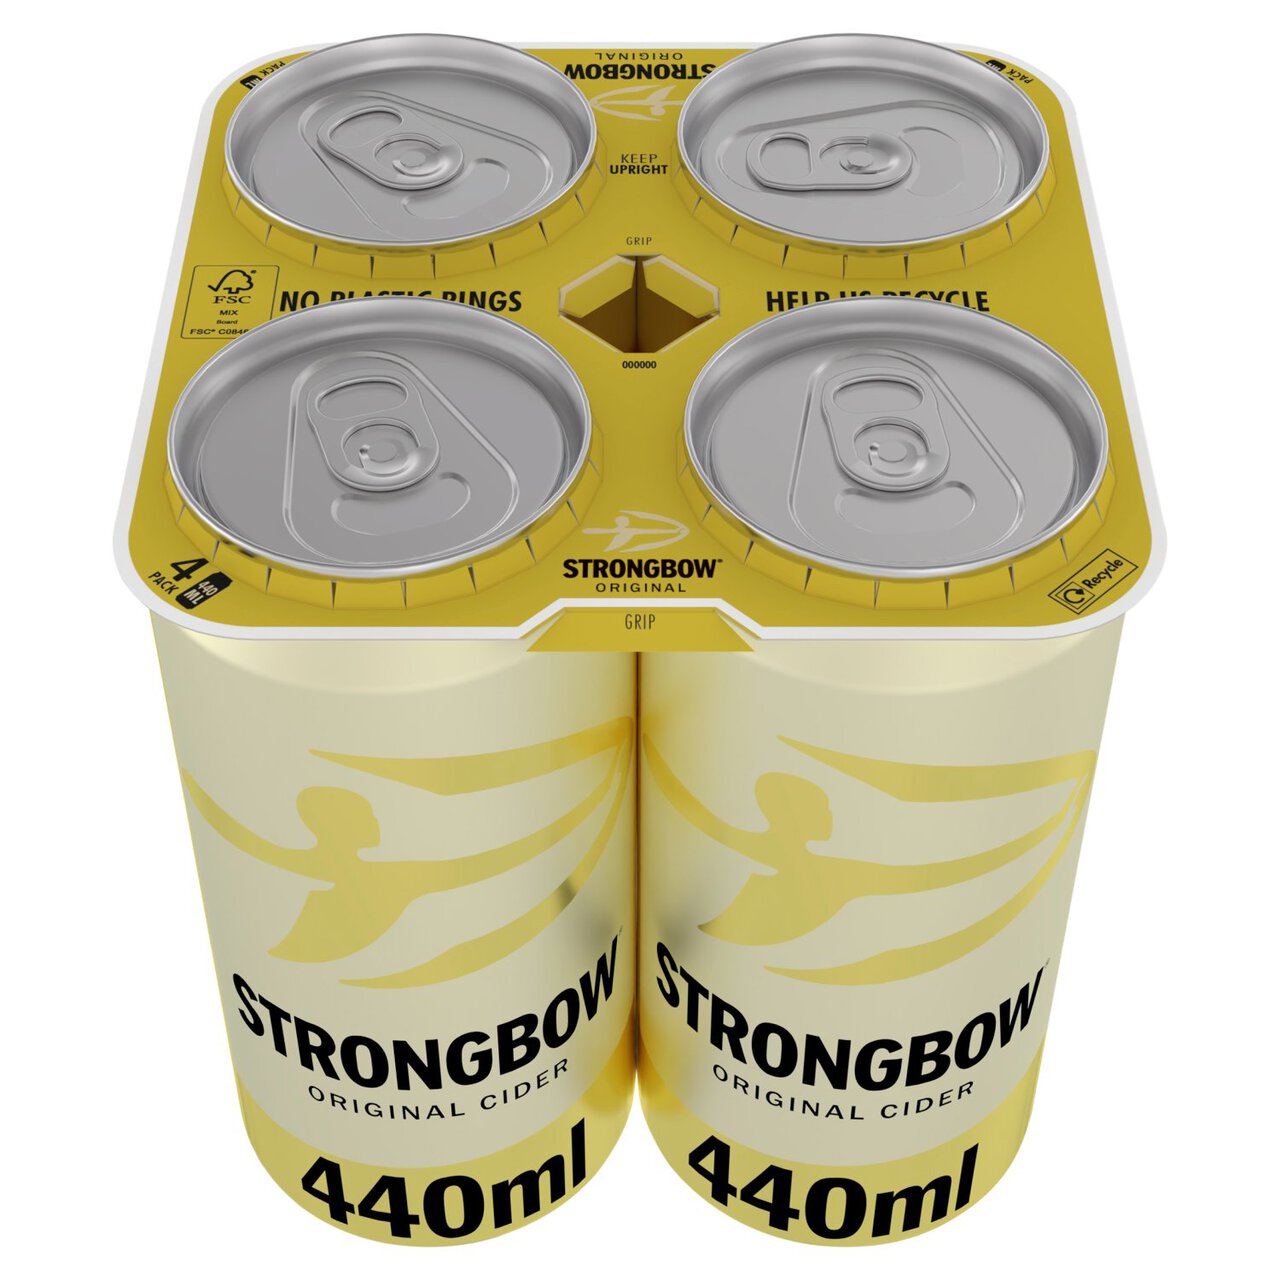 Strongbow Original Cider 4 x 440ml